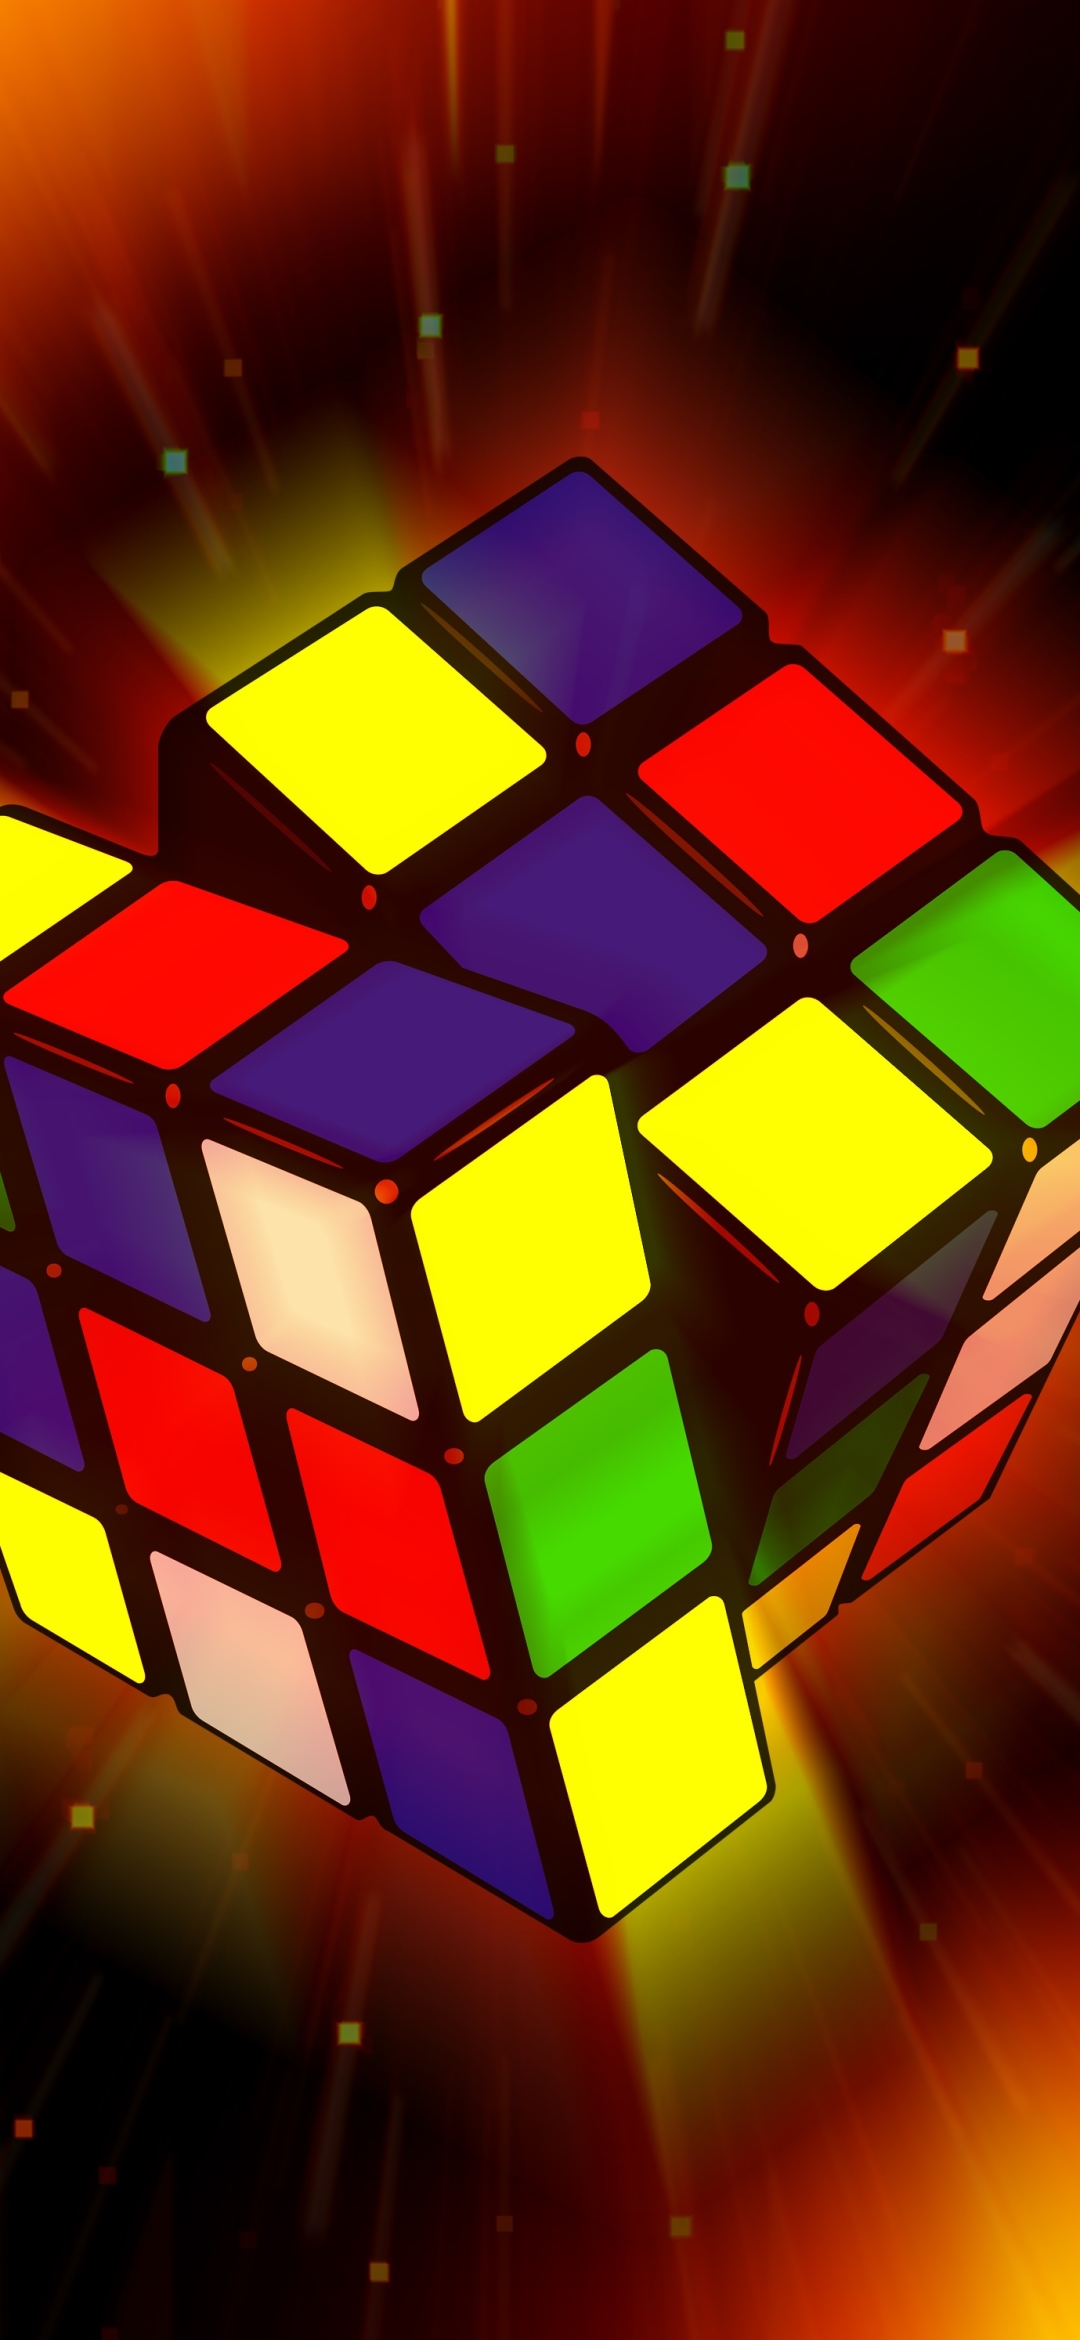 colors, rubik's cube, game, colorful